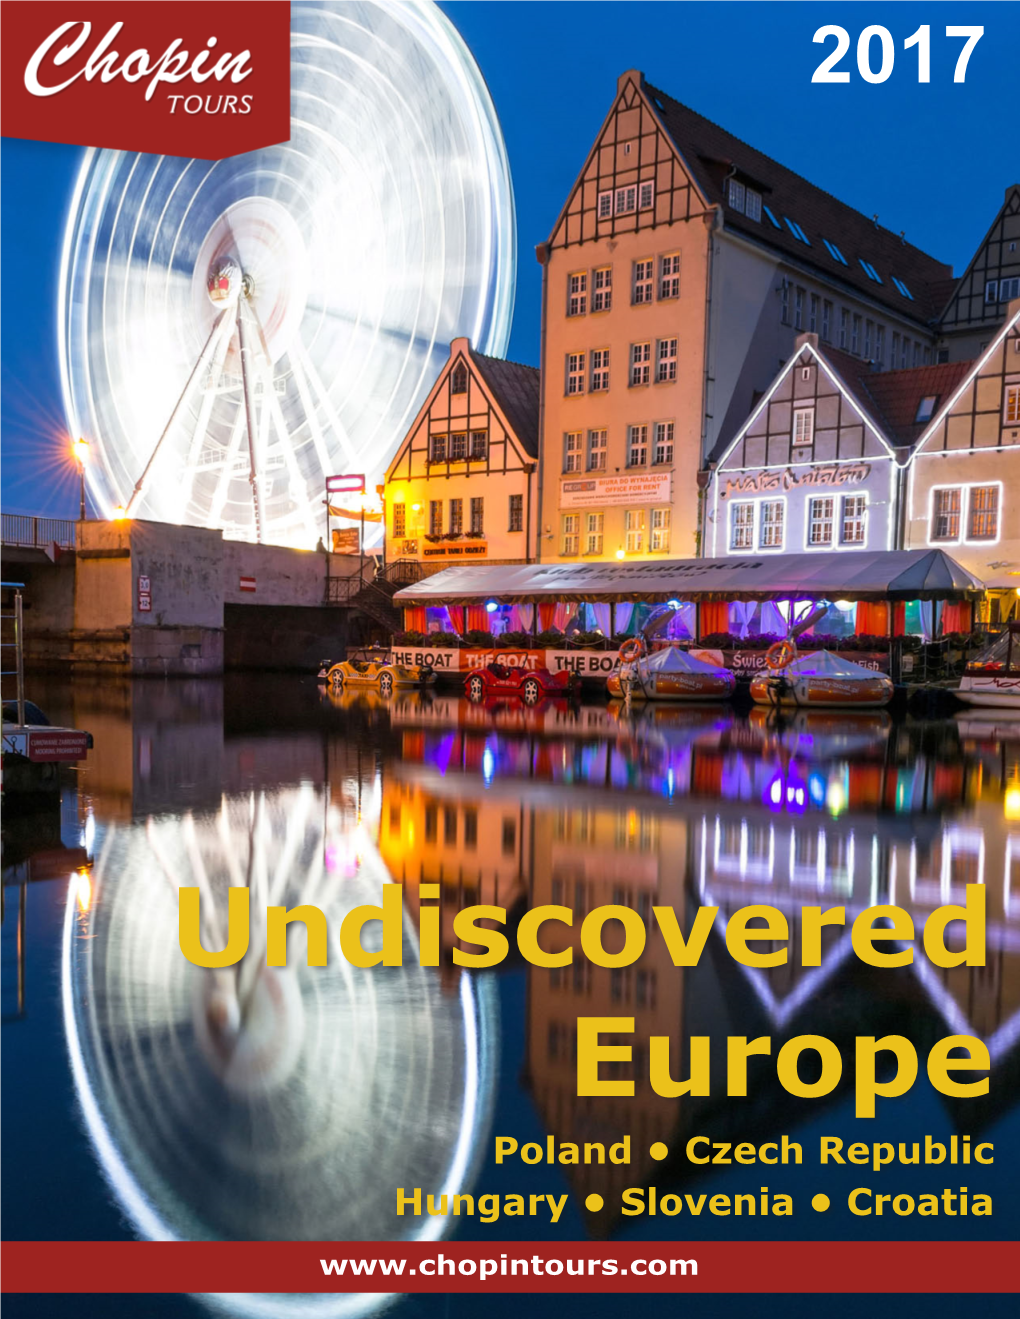 Undiscovered Europe Undiscovered Europe